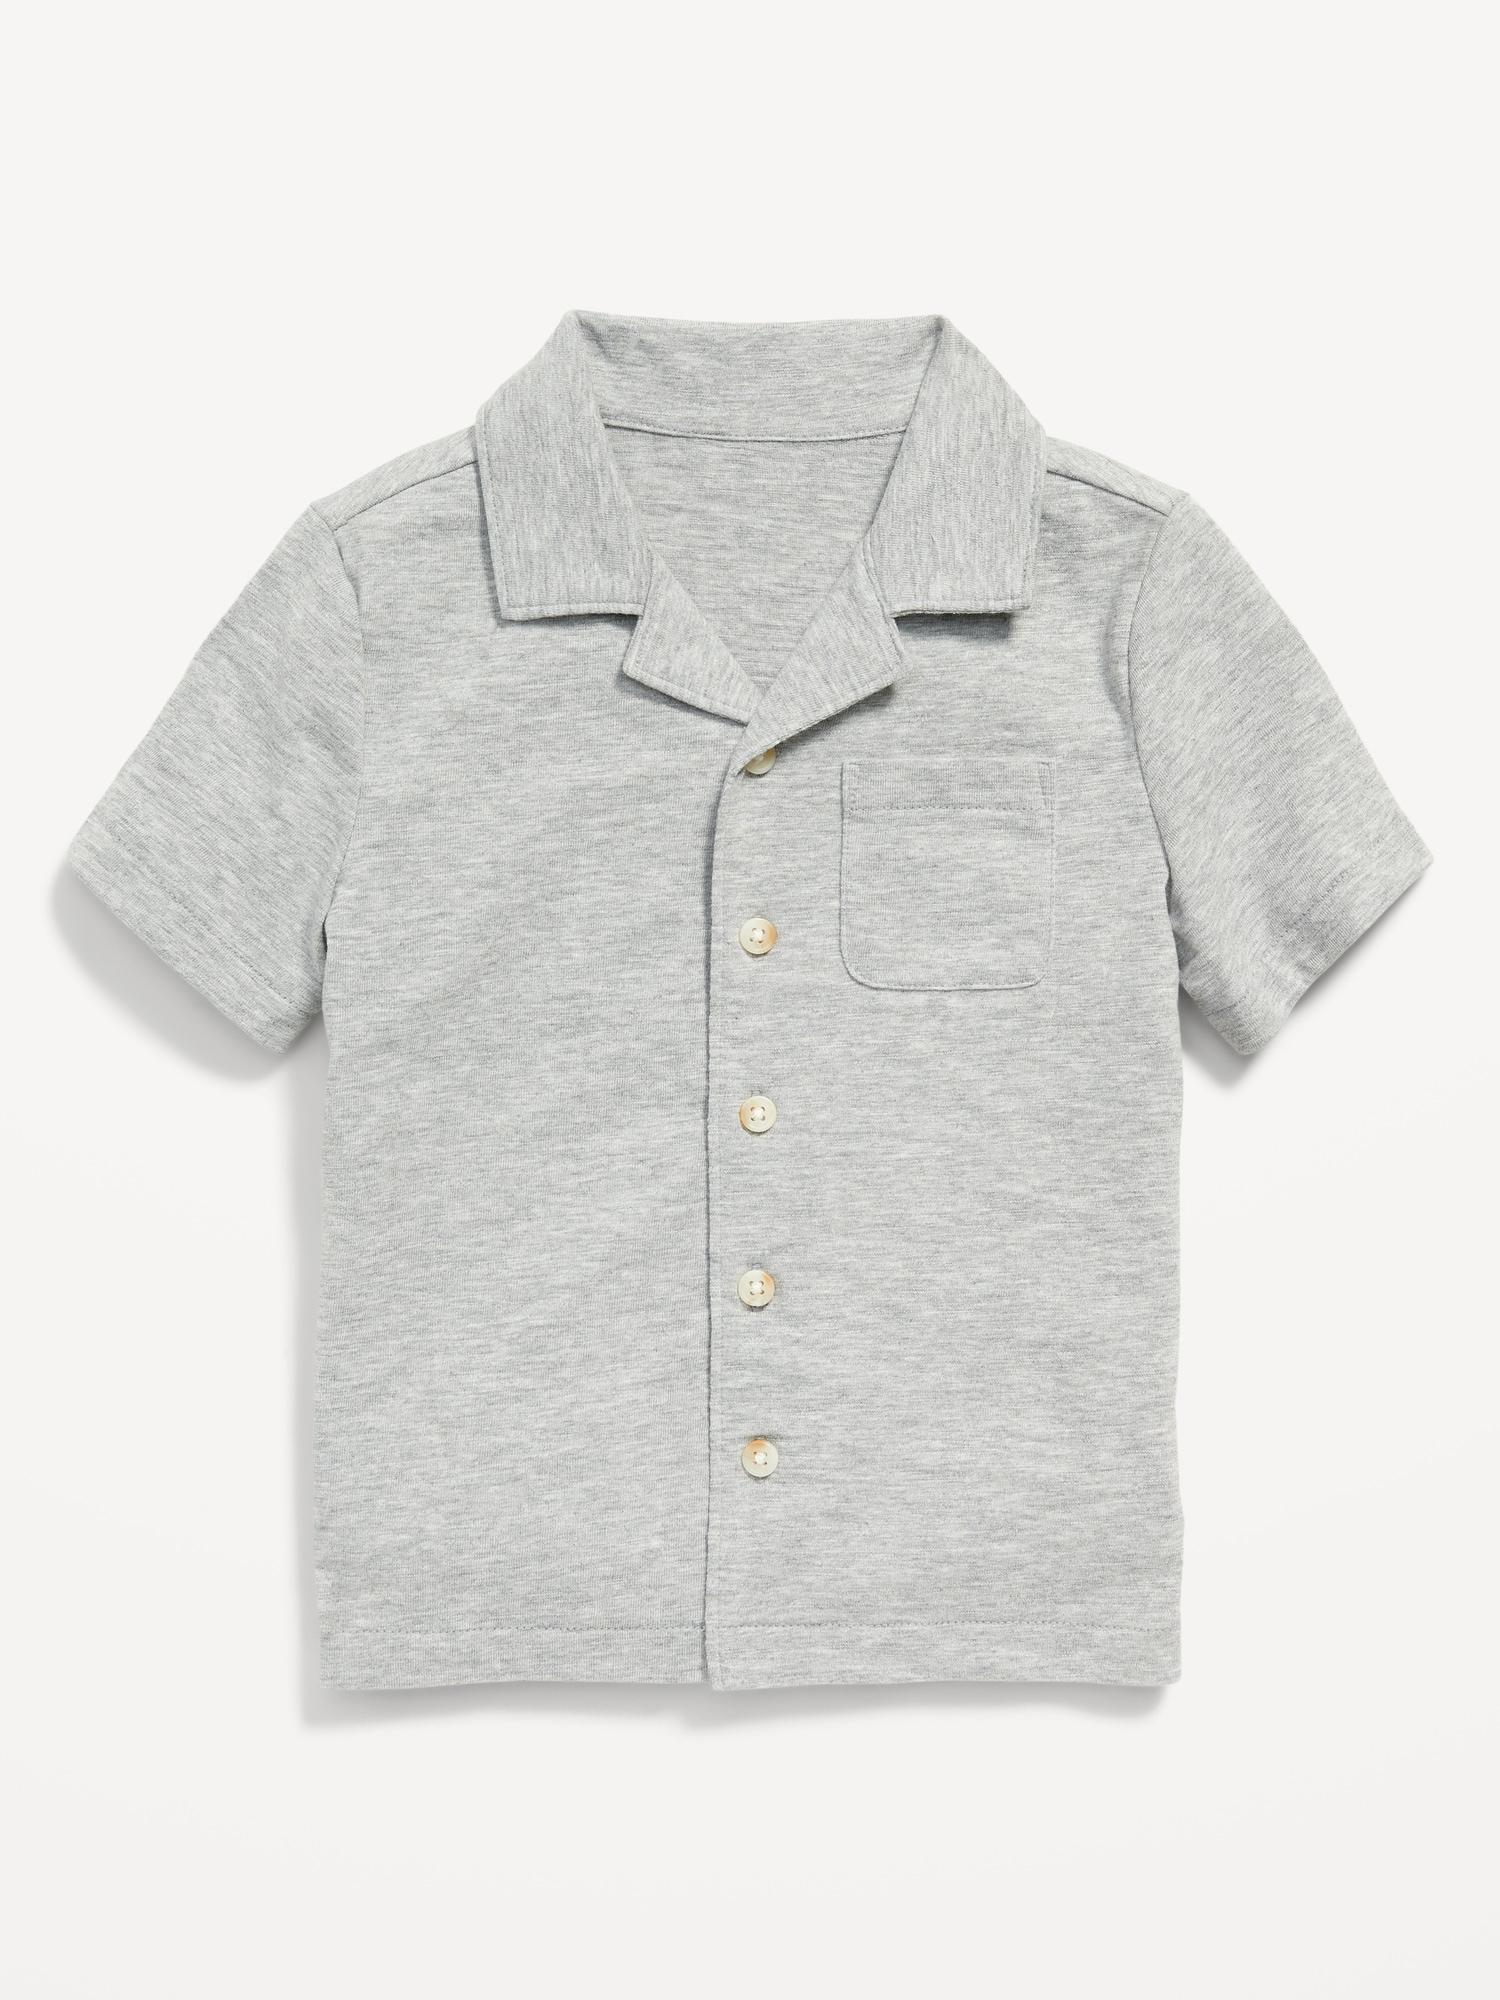 Old Navy Short-Sleeve Camp Shirt for Toddler Boys gray. 1